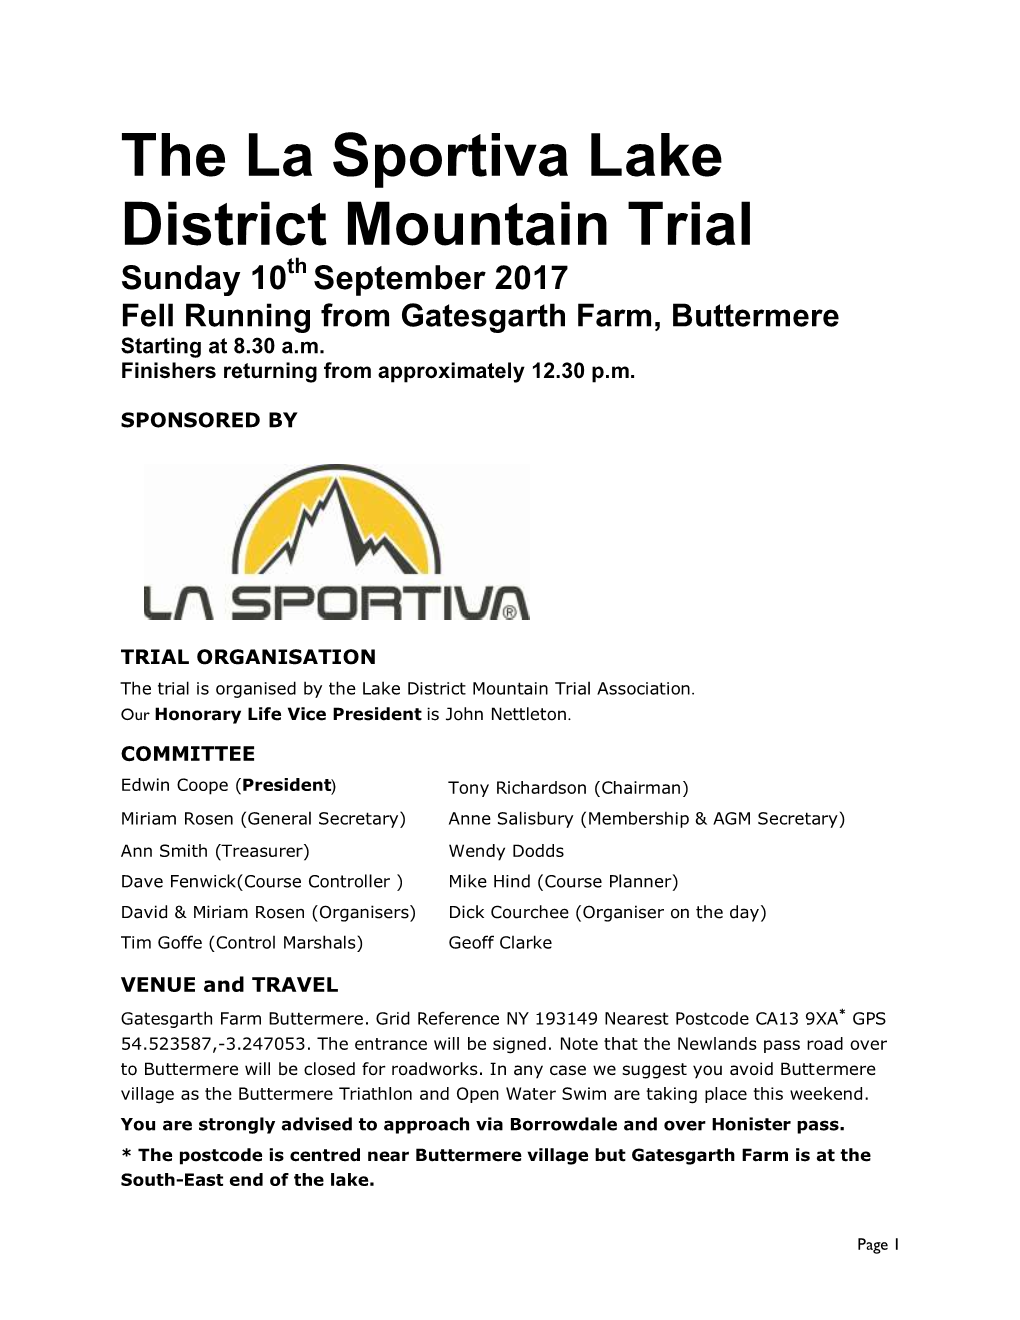 The Petzl Lake District Mountain Trial